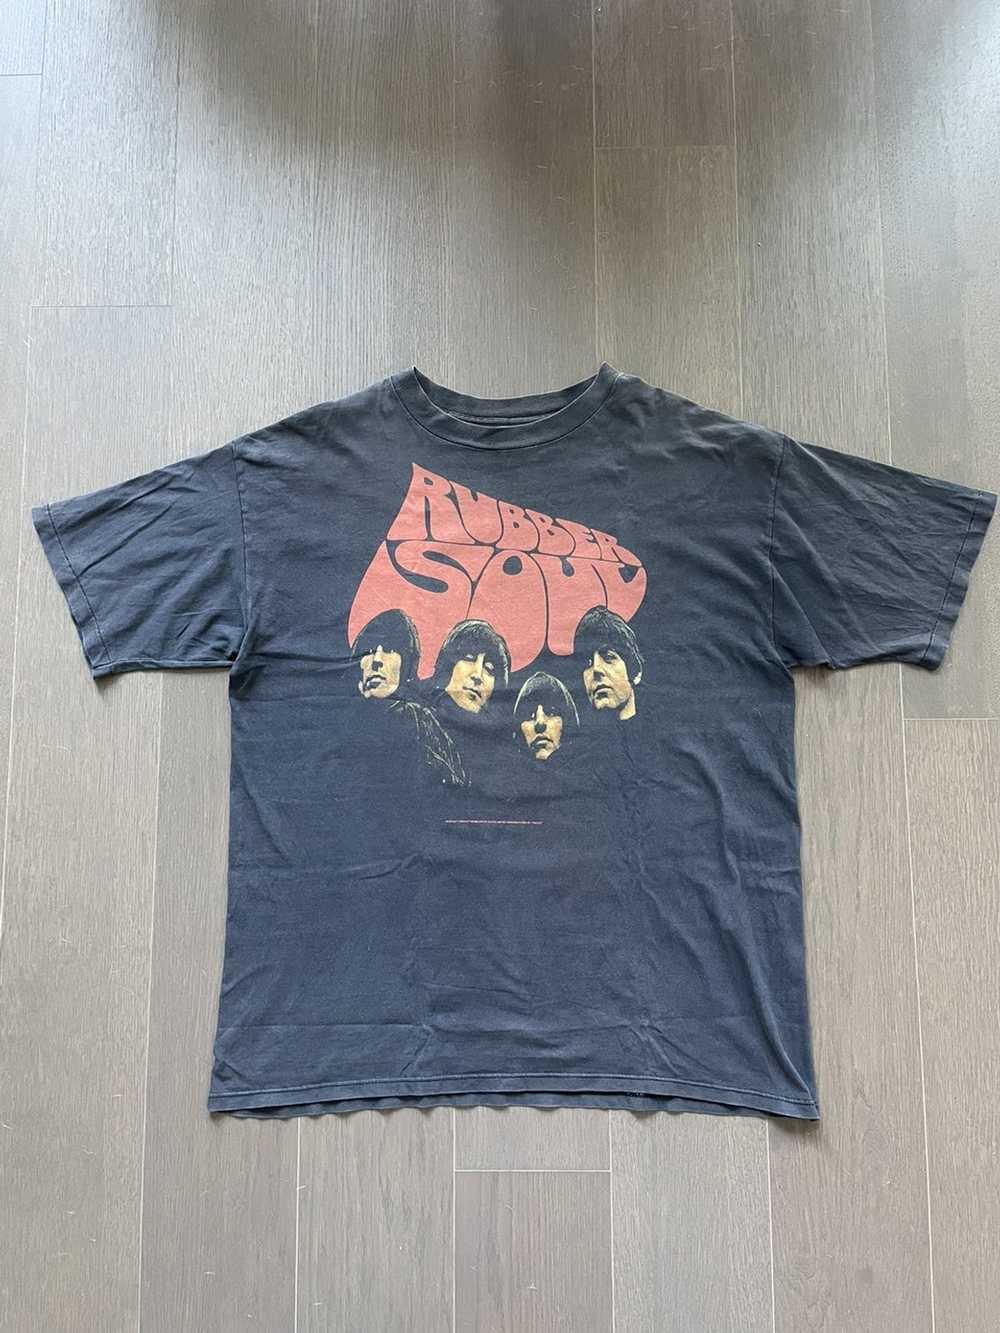 Vintage Vintage 1996 Beatles Rubber Soul T-Shirt - image 1